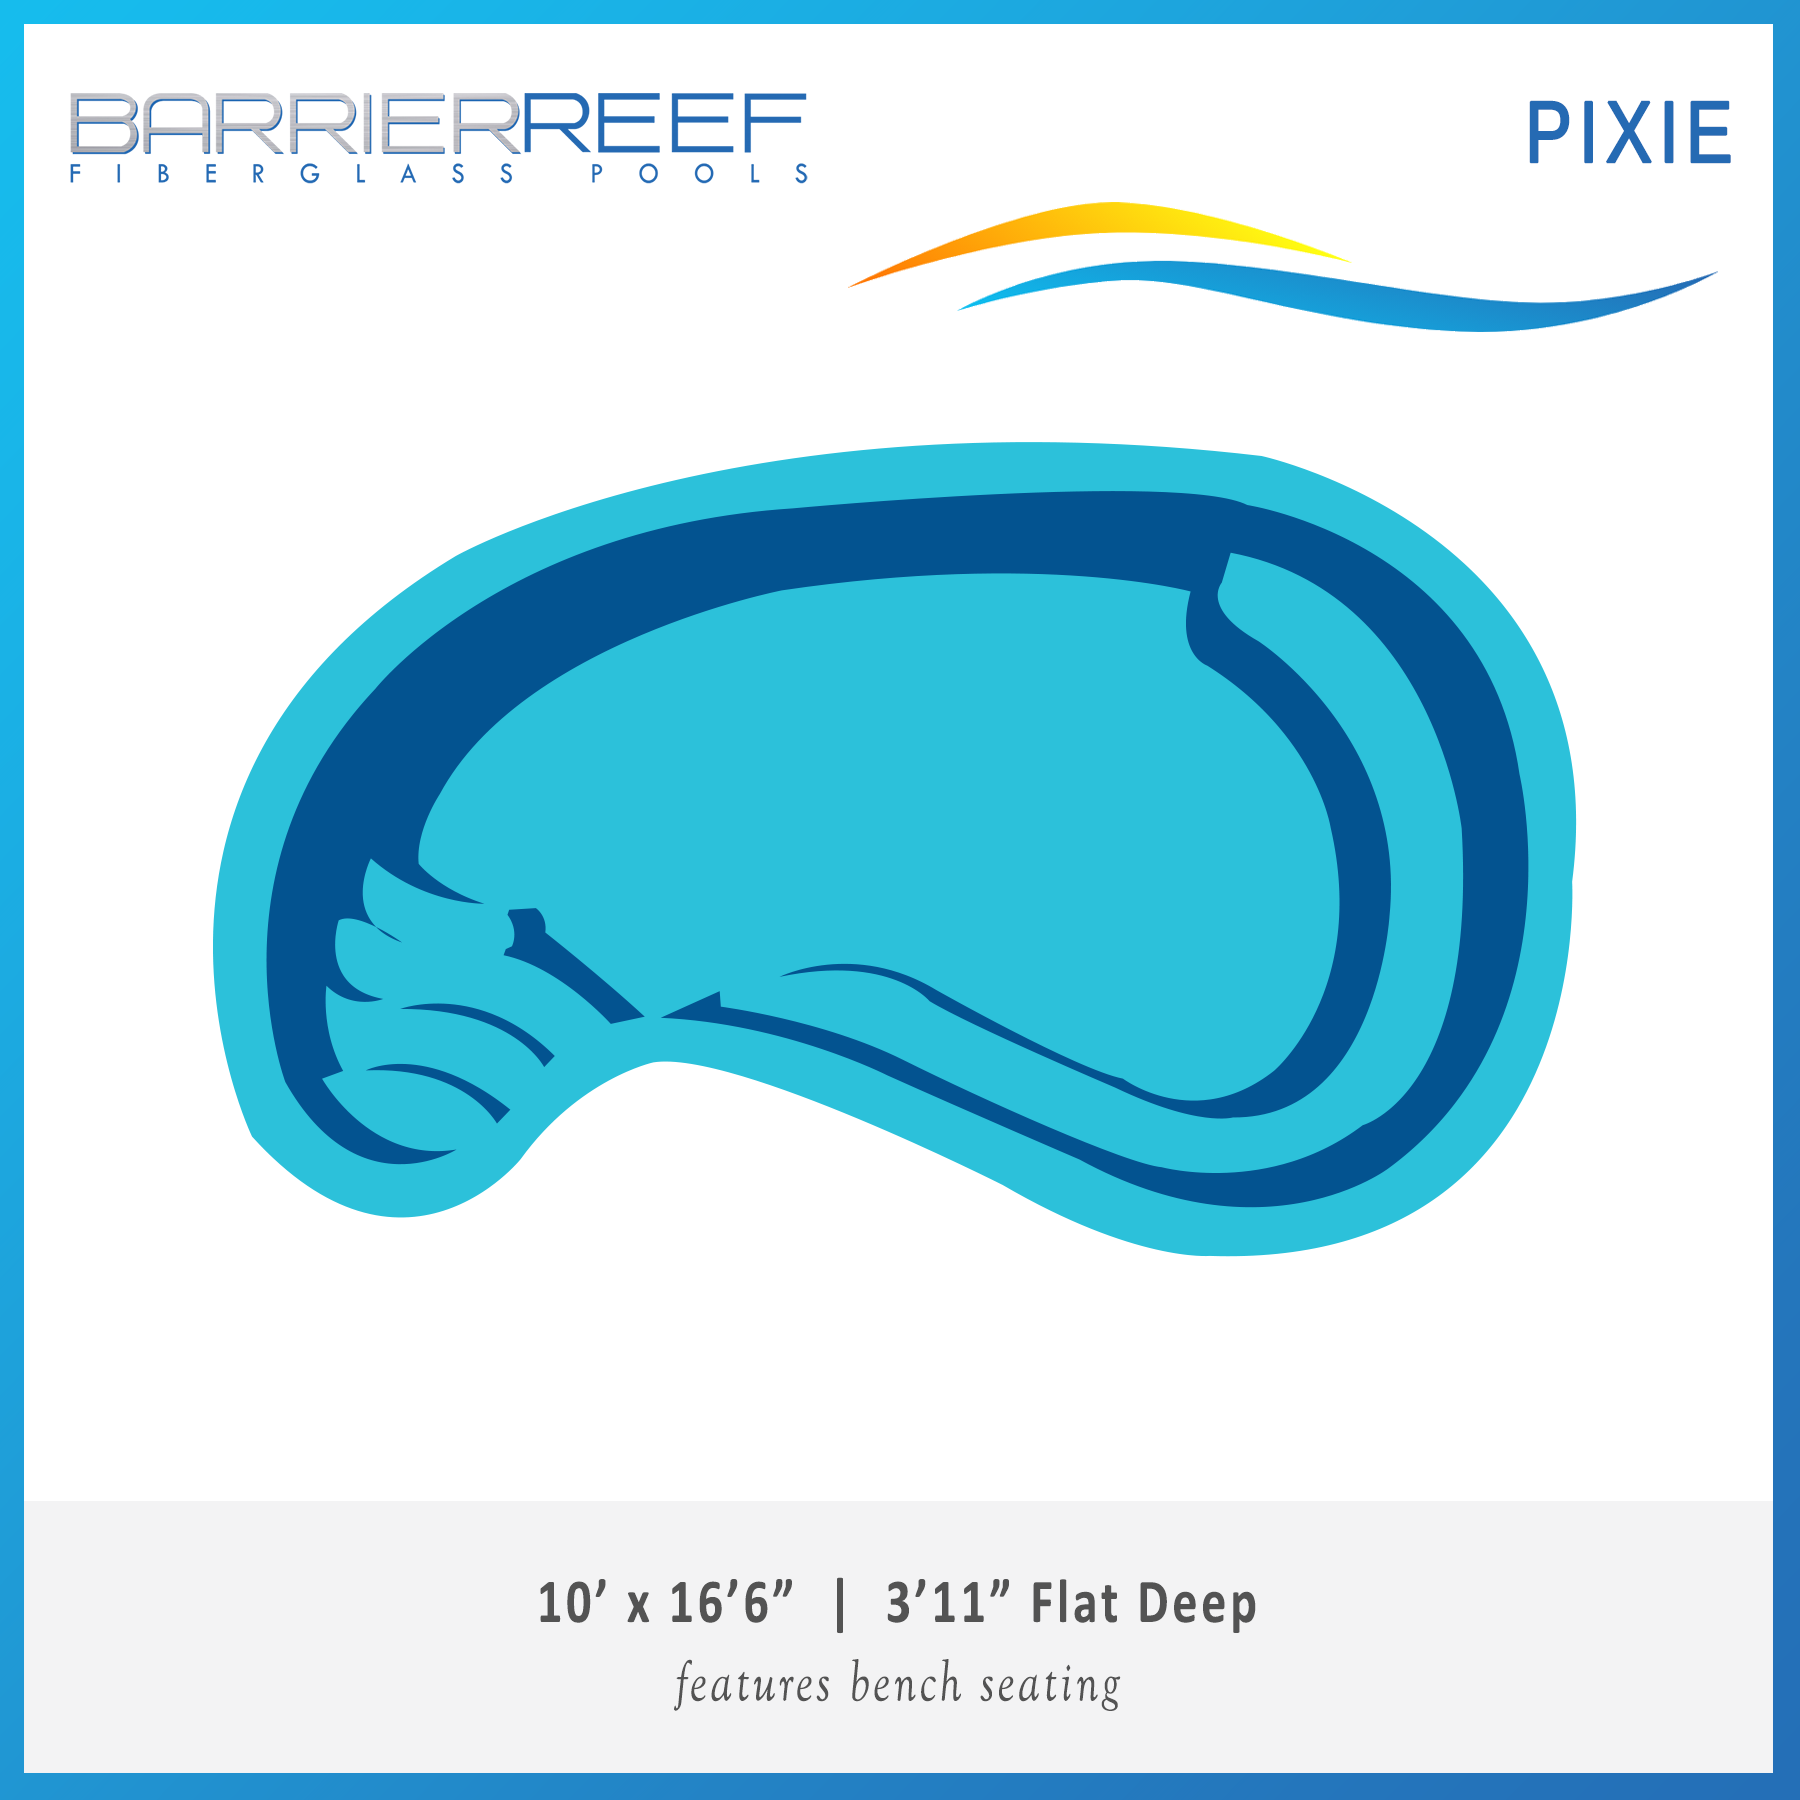 Pixie Barrier Reef Fiberglass Pool